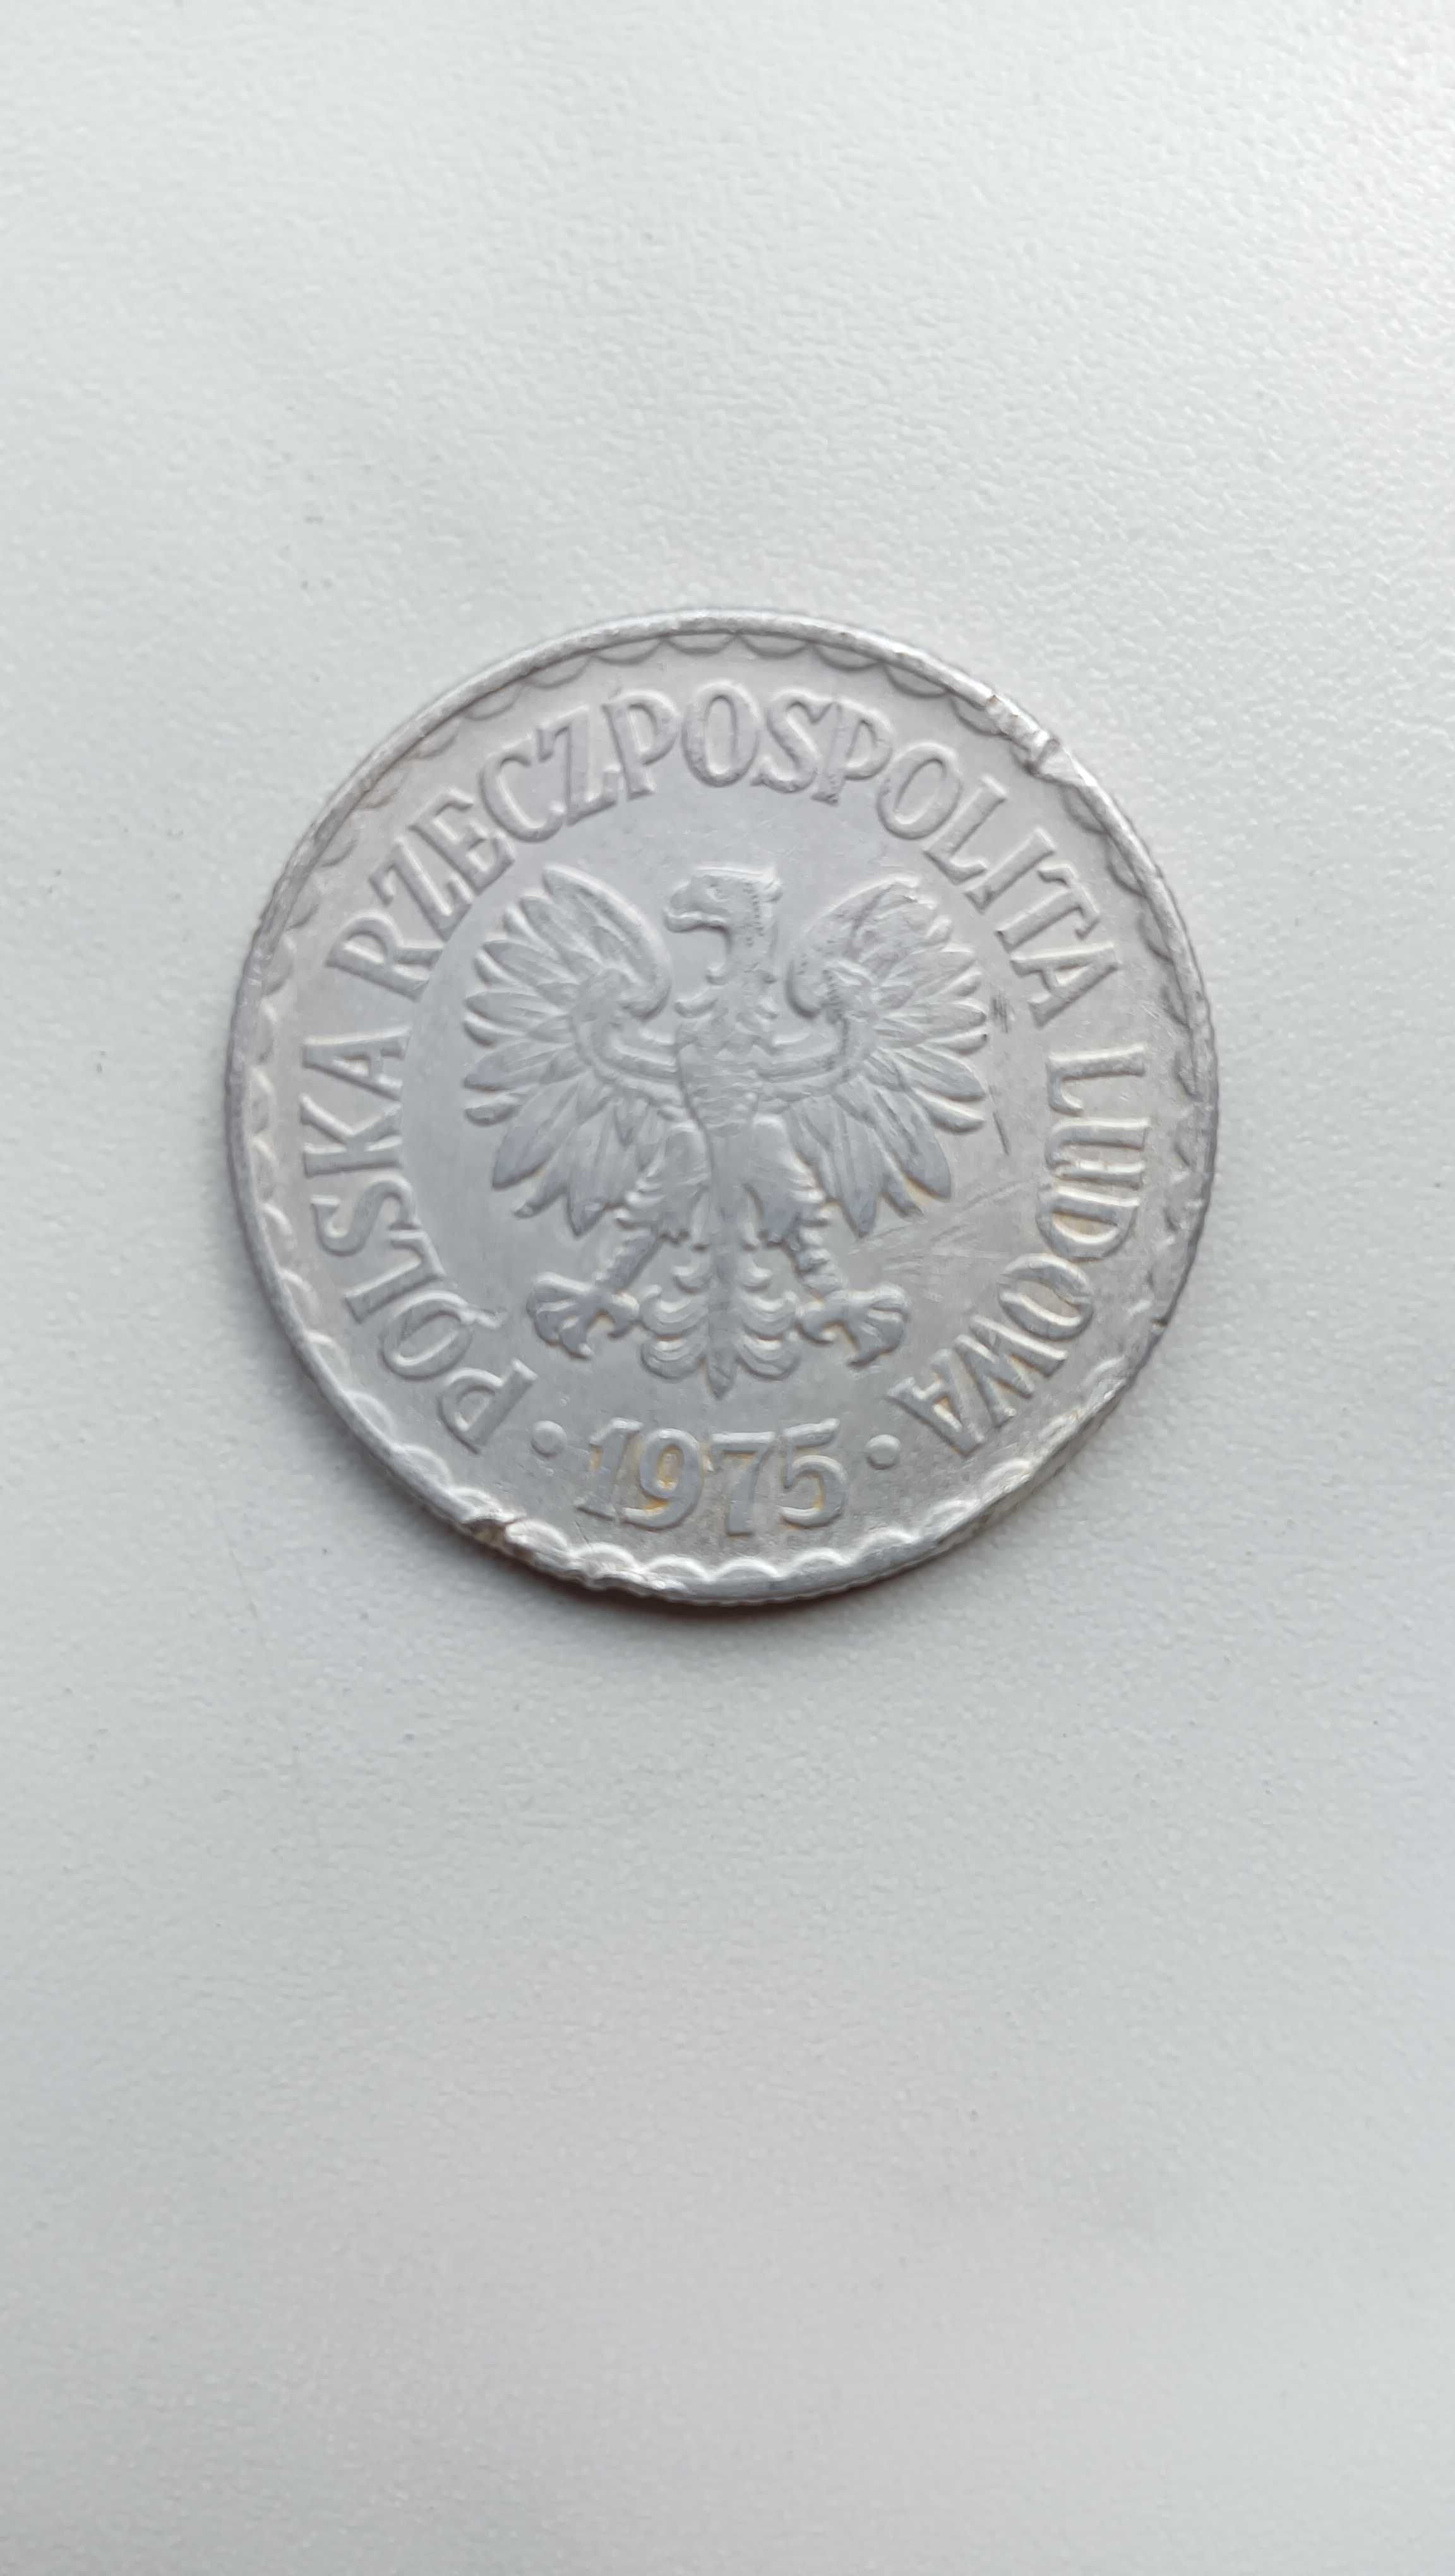 Moneta z PRL-u rok 1975